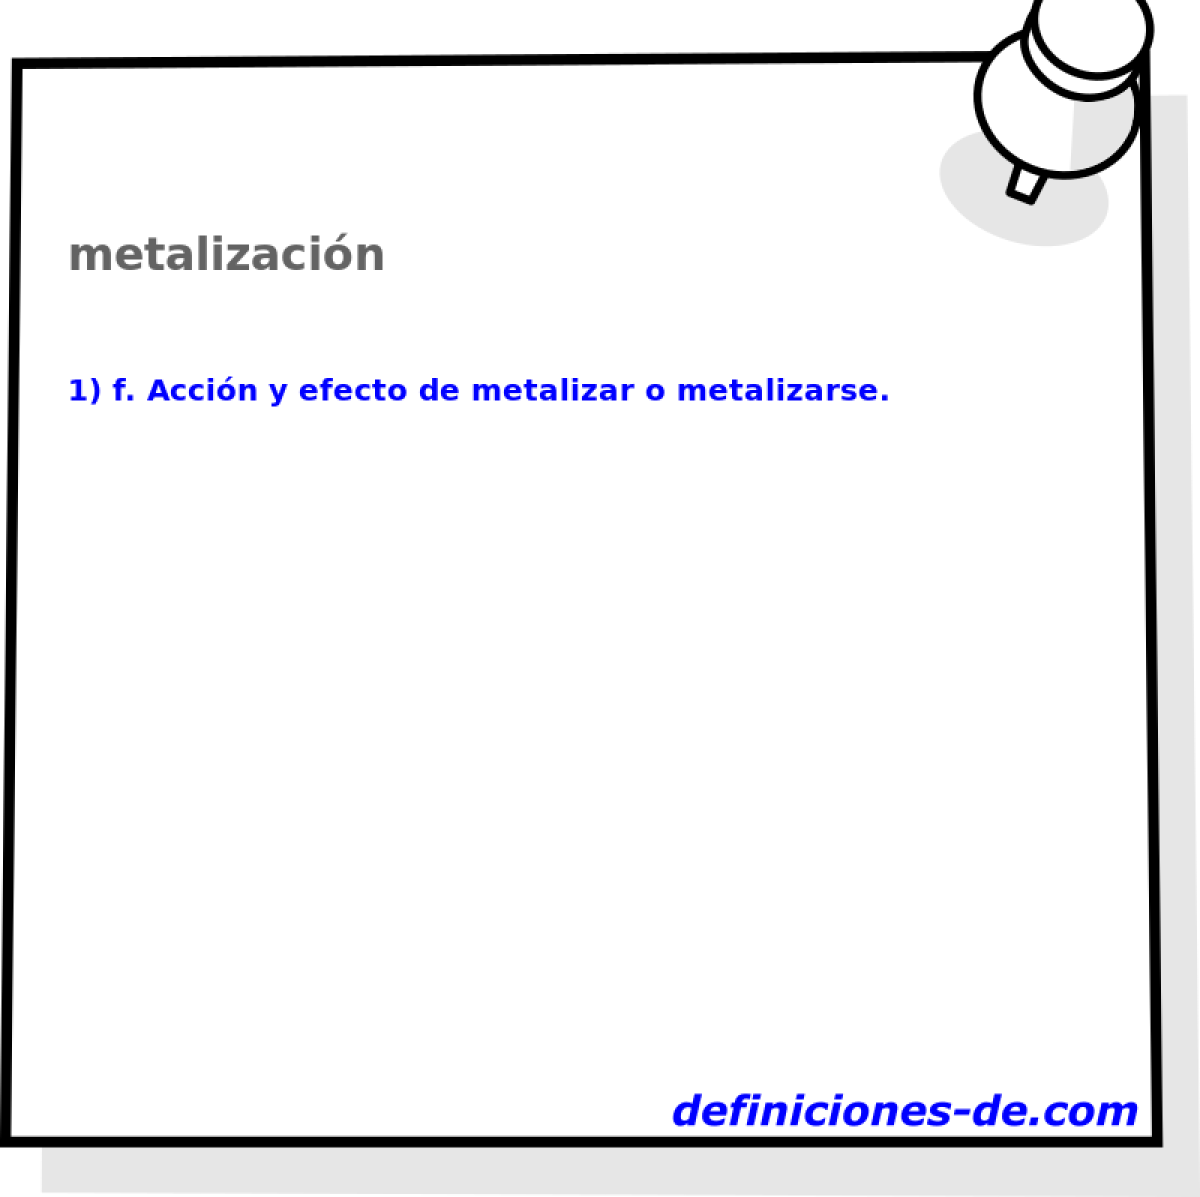 metalizacin 